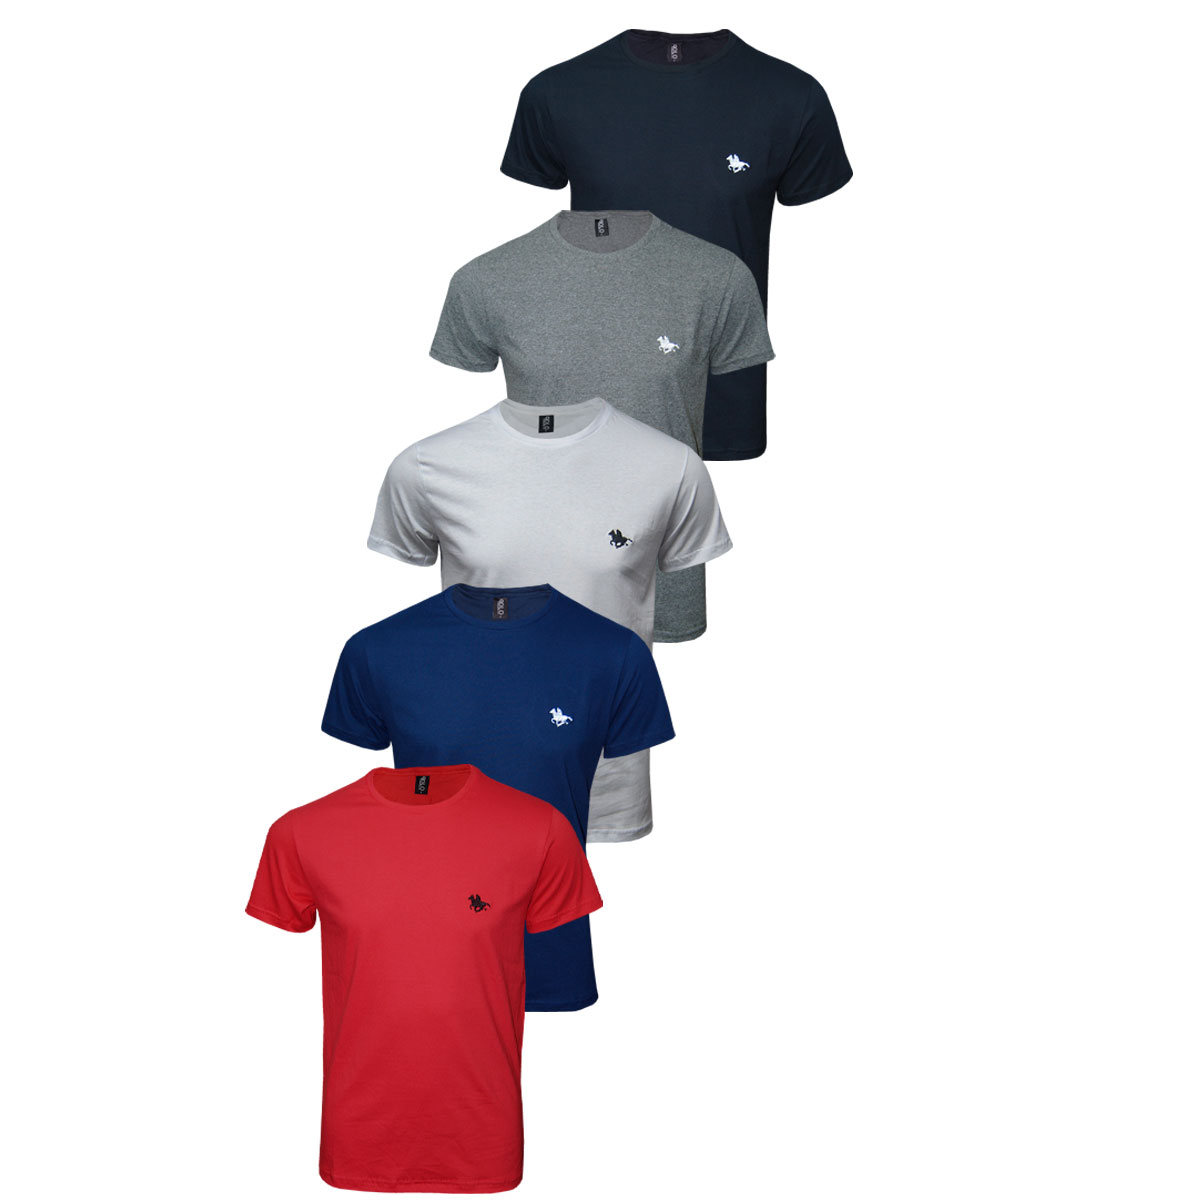 Kit Camisetas Masculinas Básicas 5 Cores Polo RG518